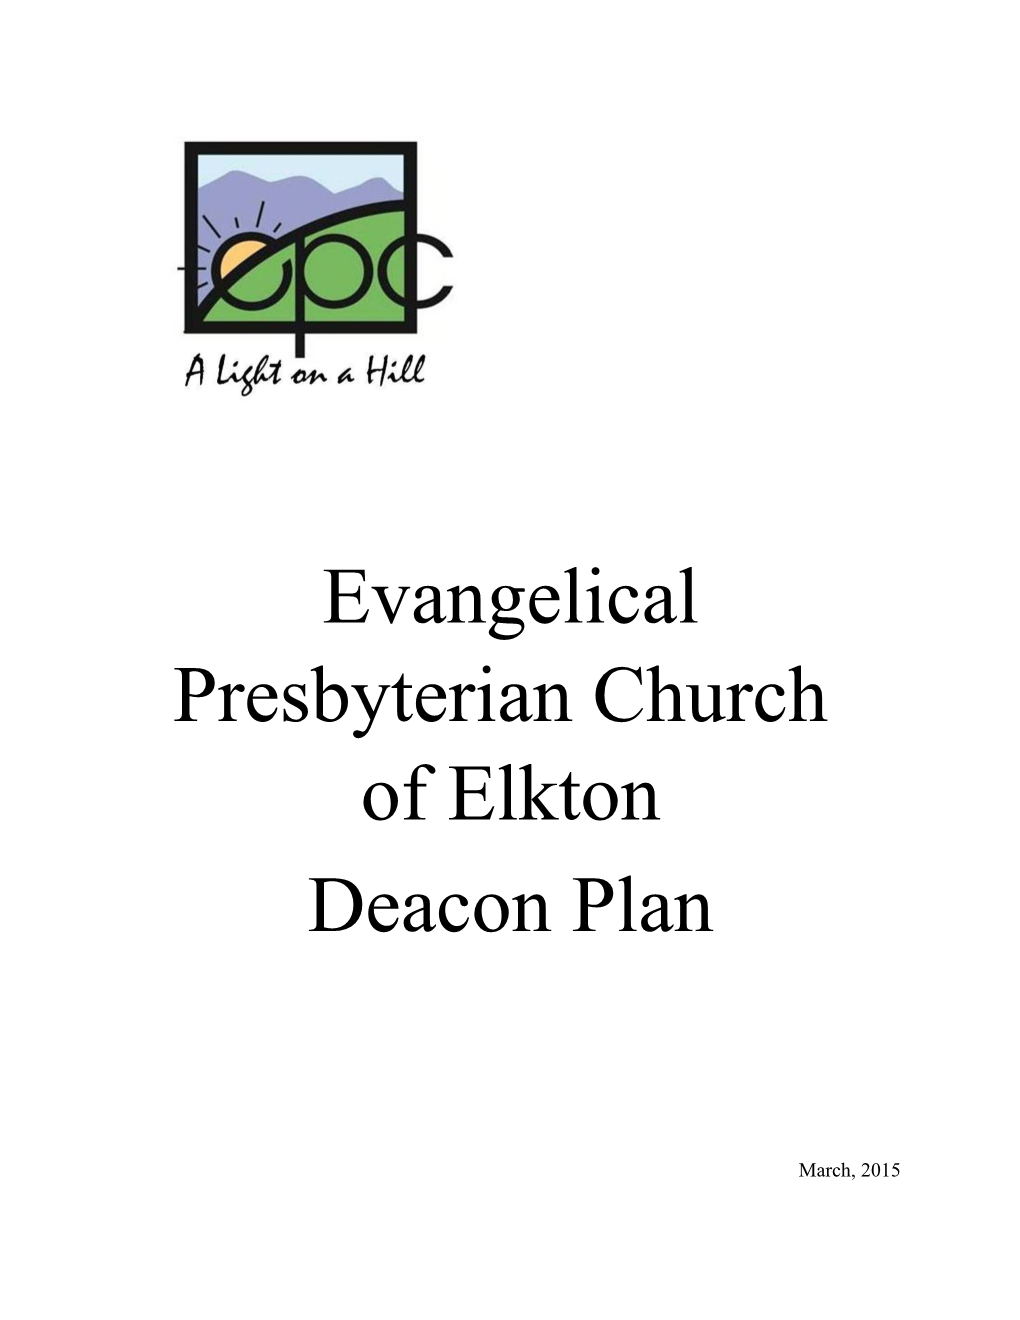 Evangelical Presbyterian Church of Elkton Deacon Ministry